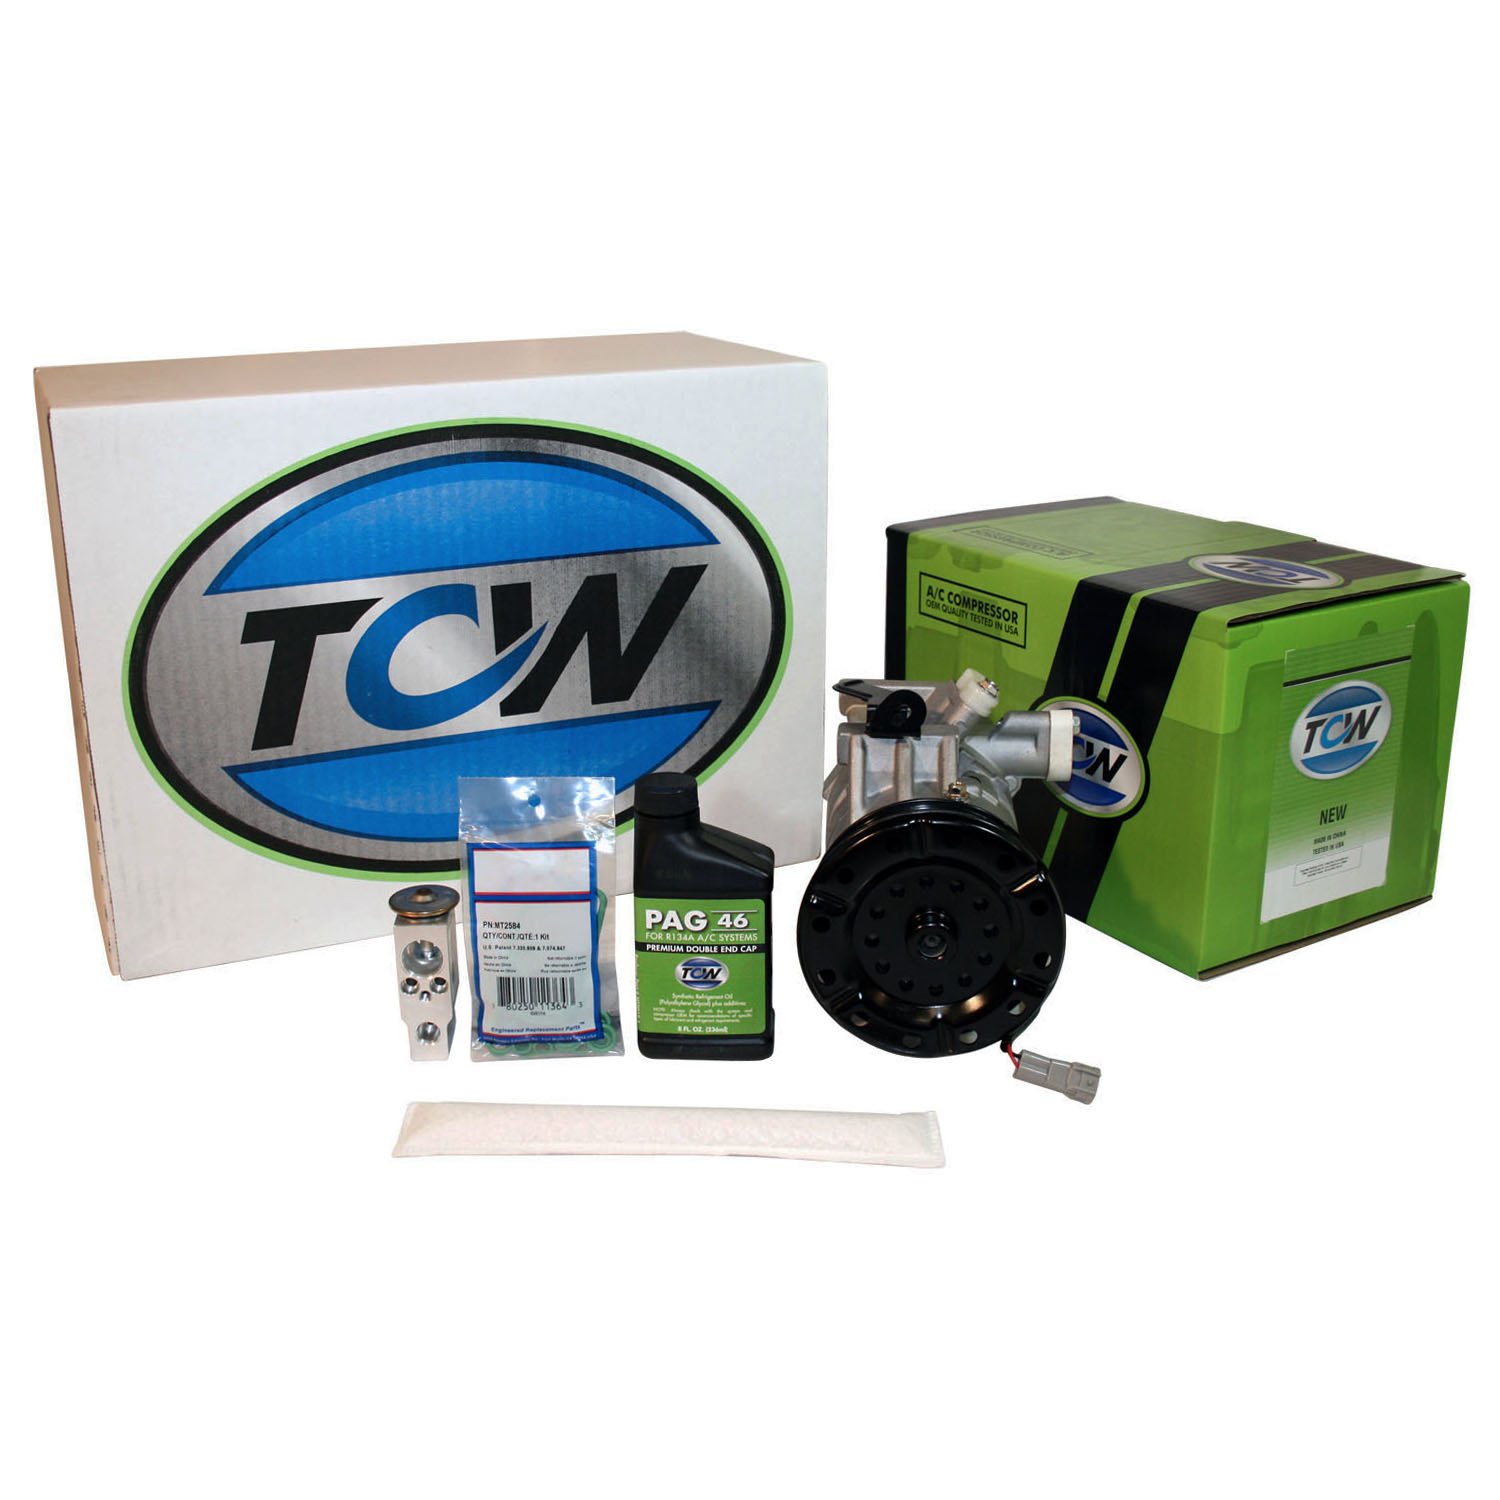 TCW Vehicle A/C Kit K1000407N New Product Image field_60b6a13a6e67c